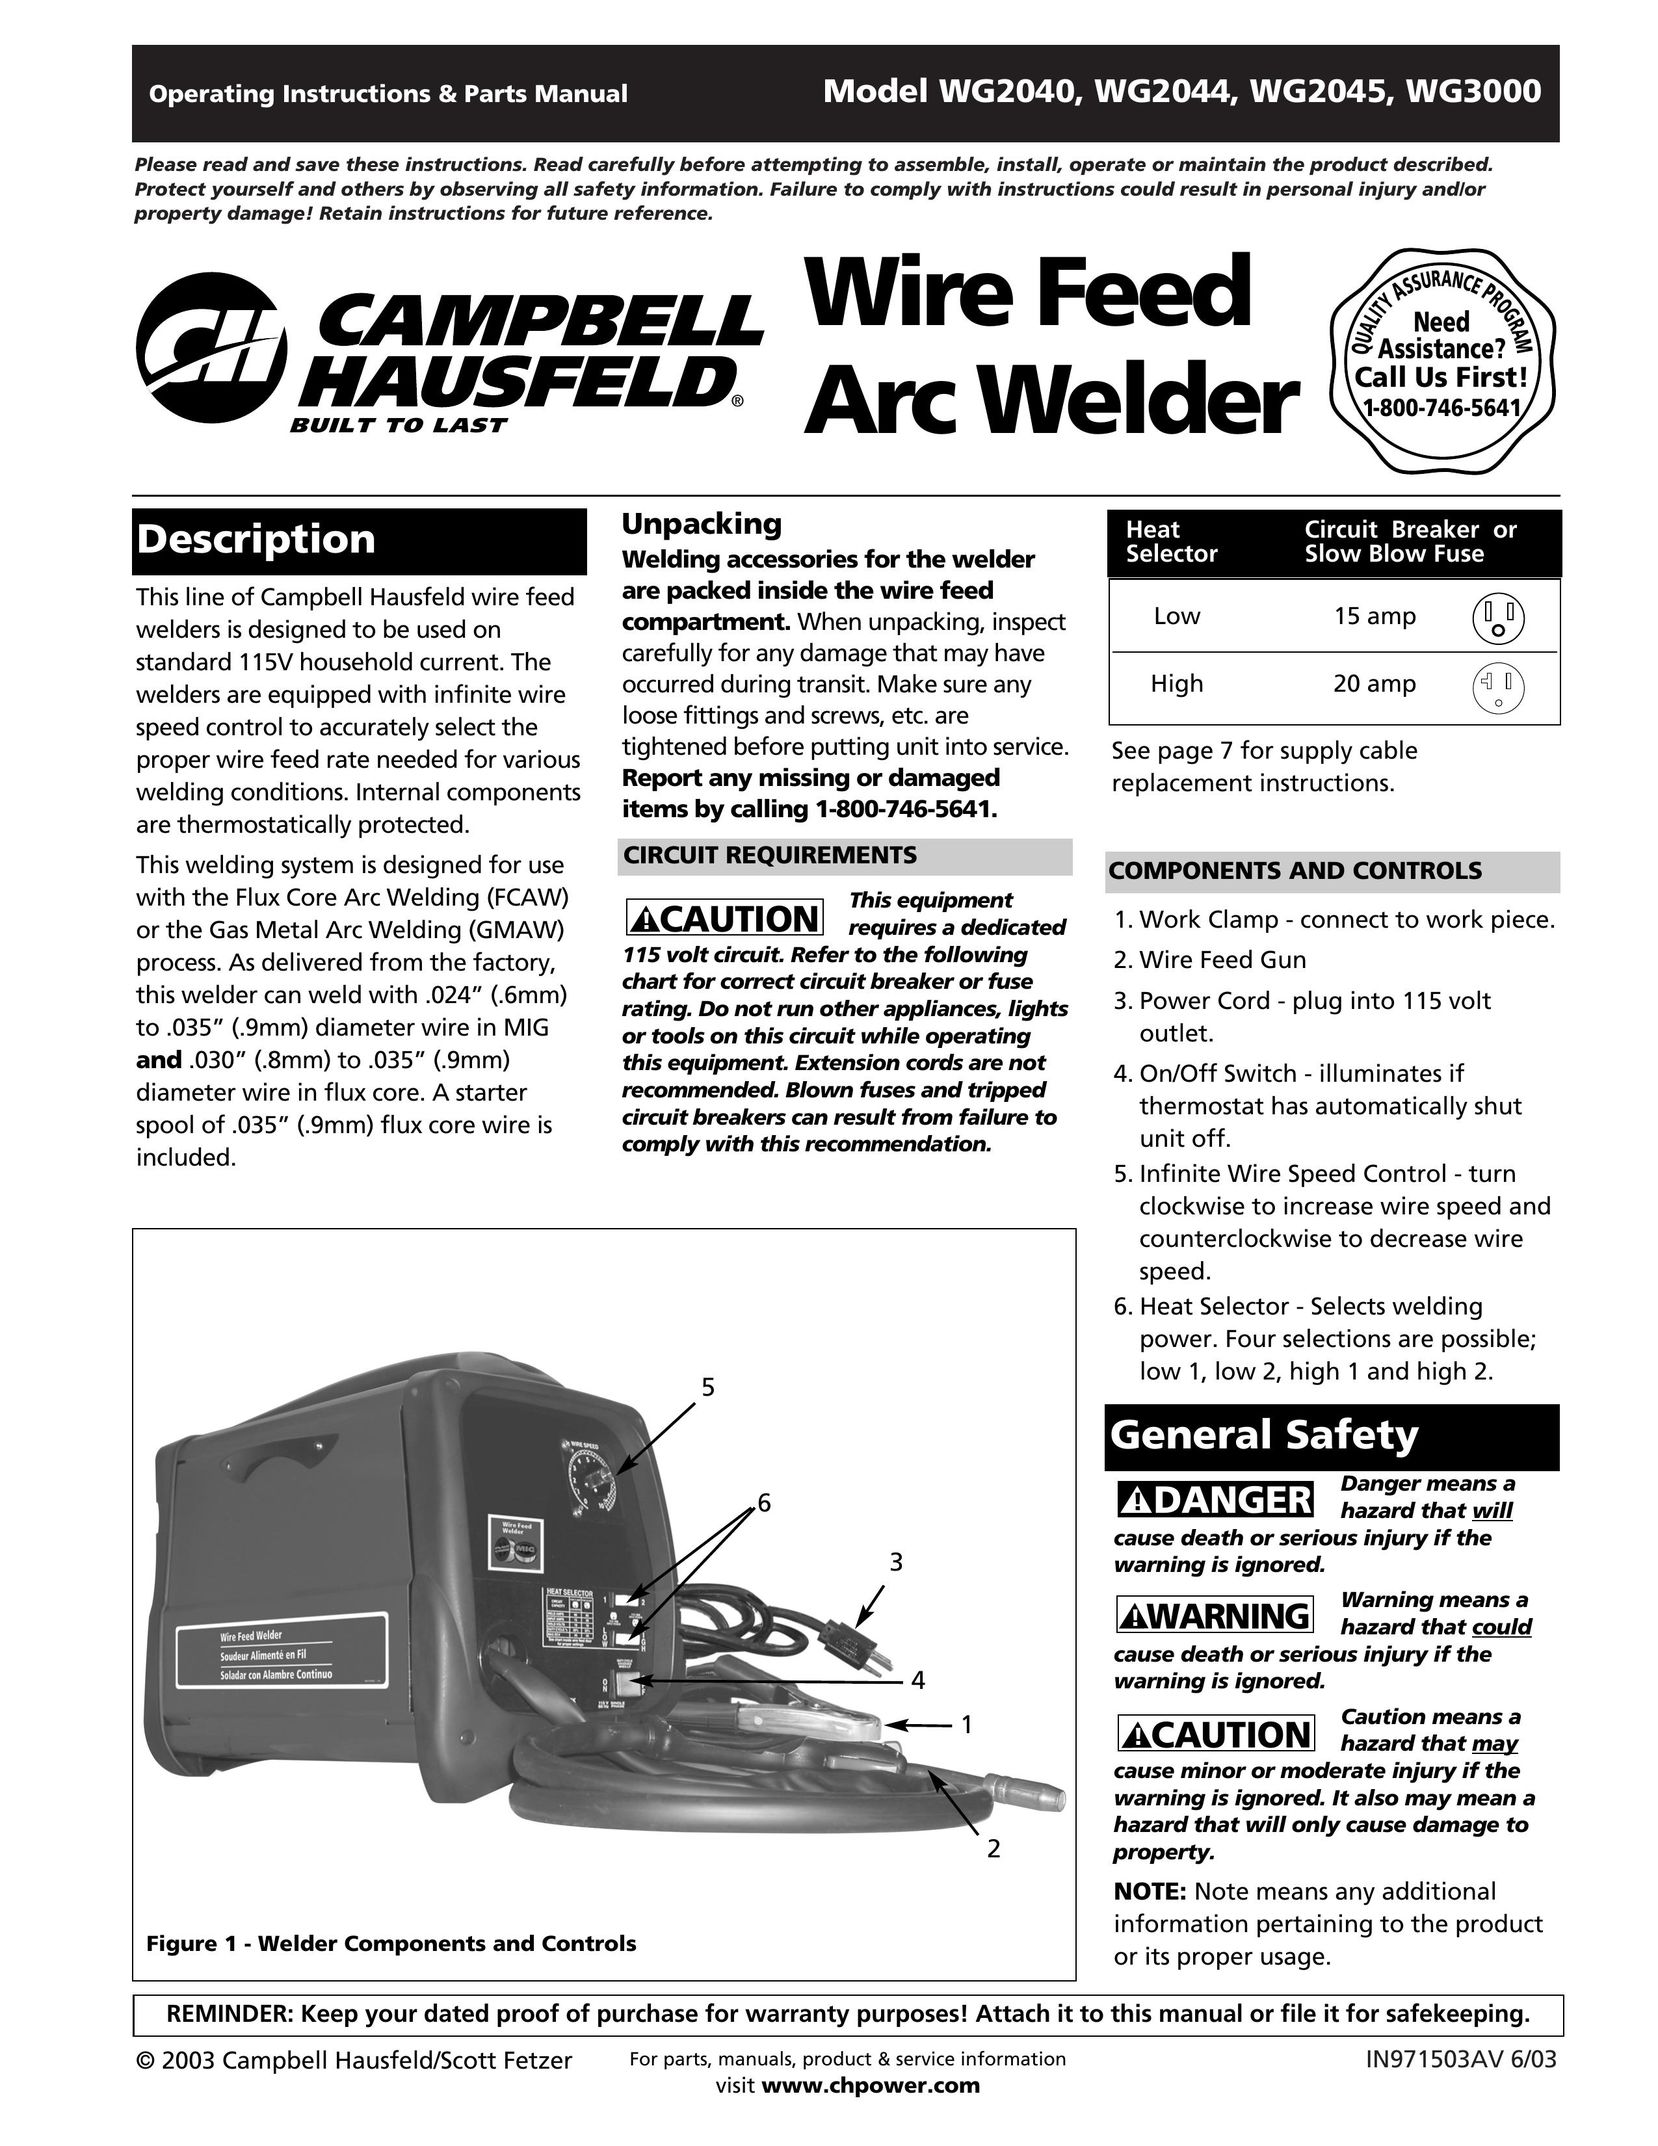 Campbell Hausfeld WG2040 PDAs & Smartphones User Manual